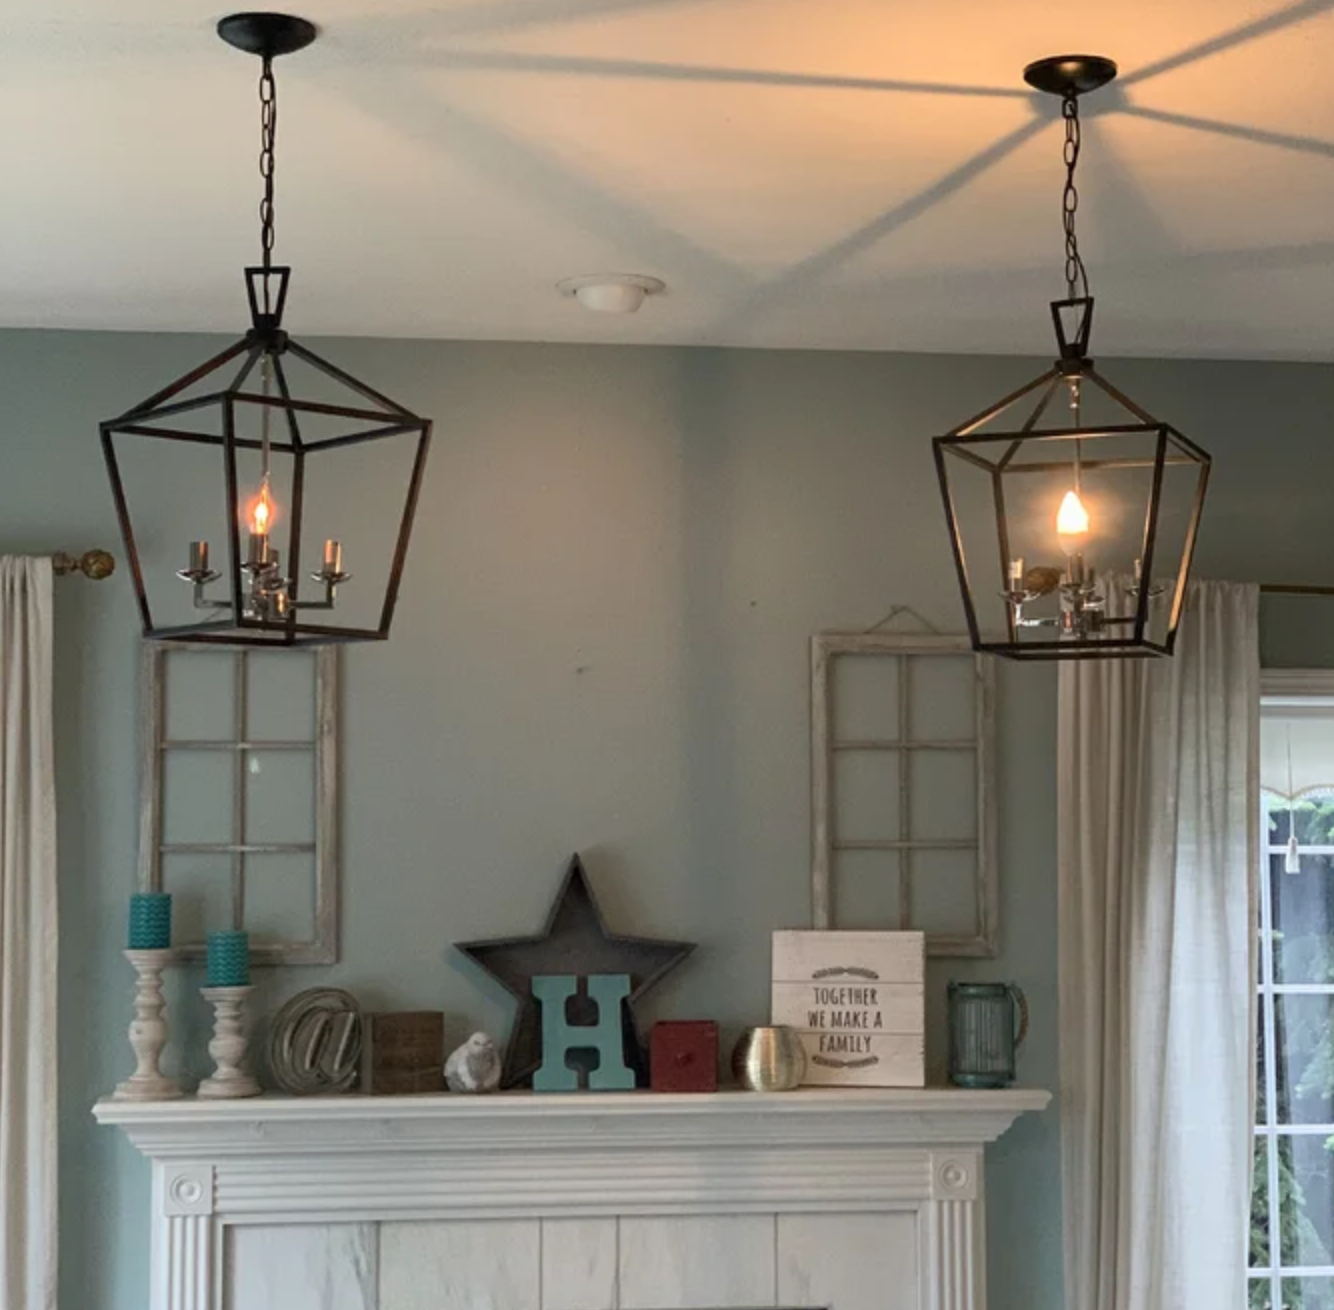 An image of two geometric pendant light inside a living room area